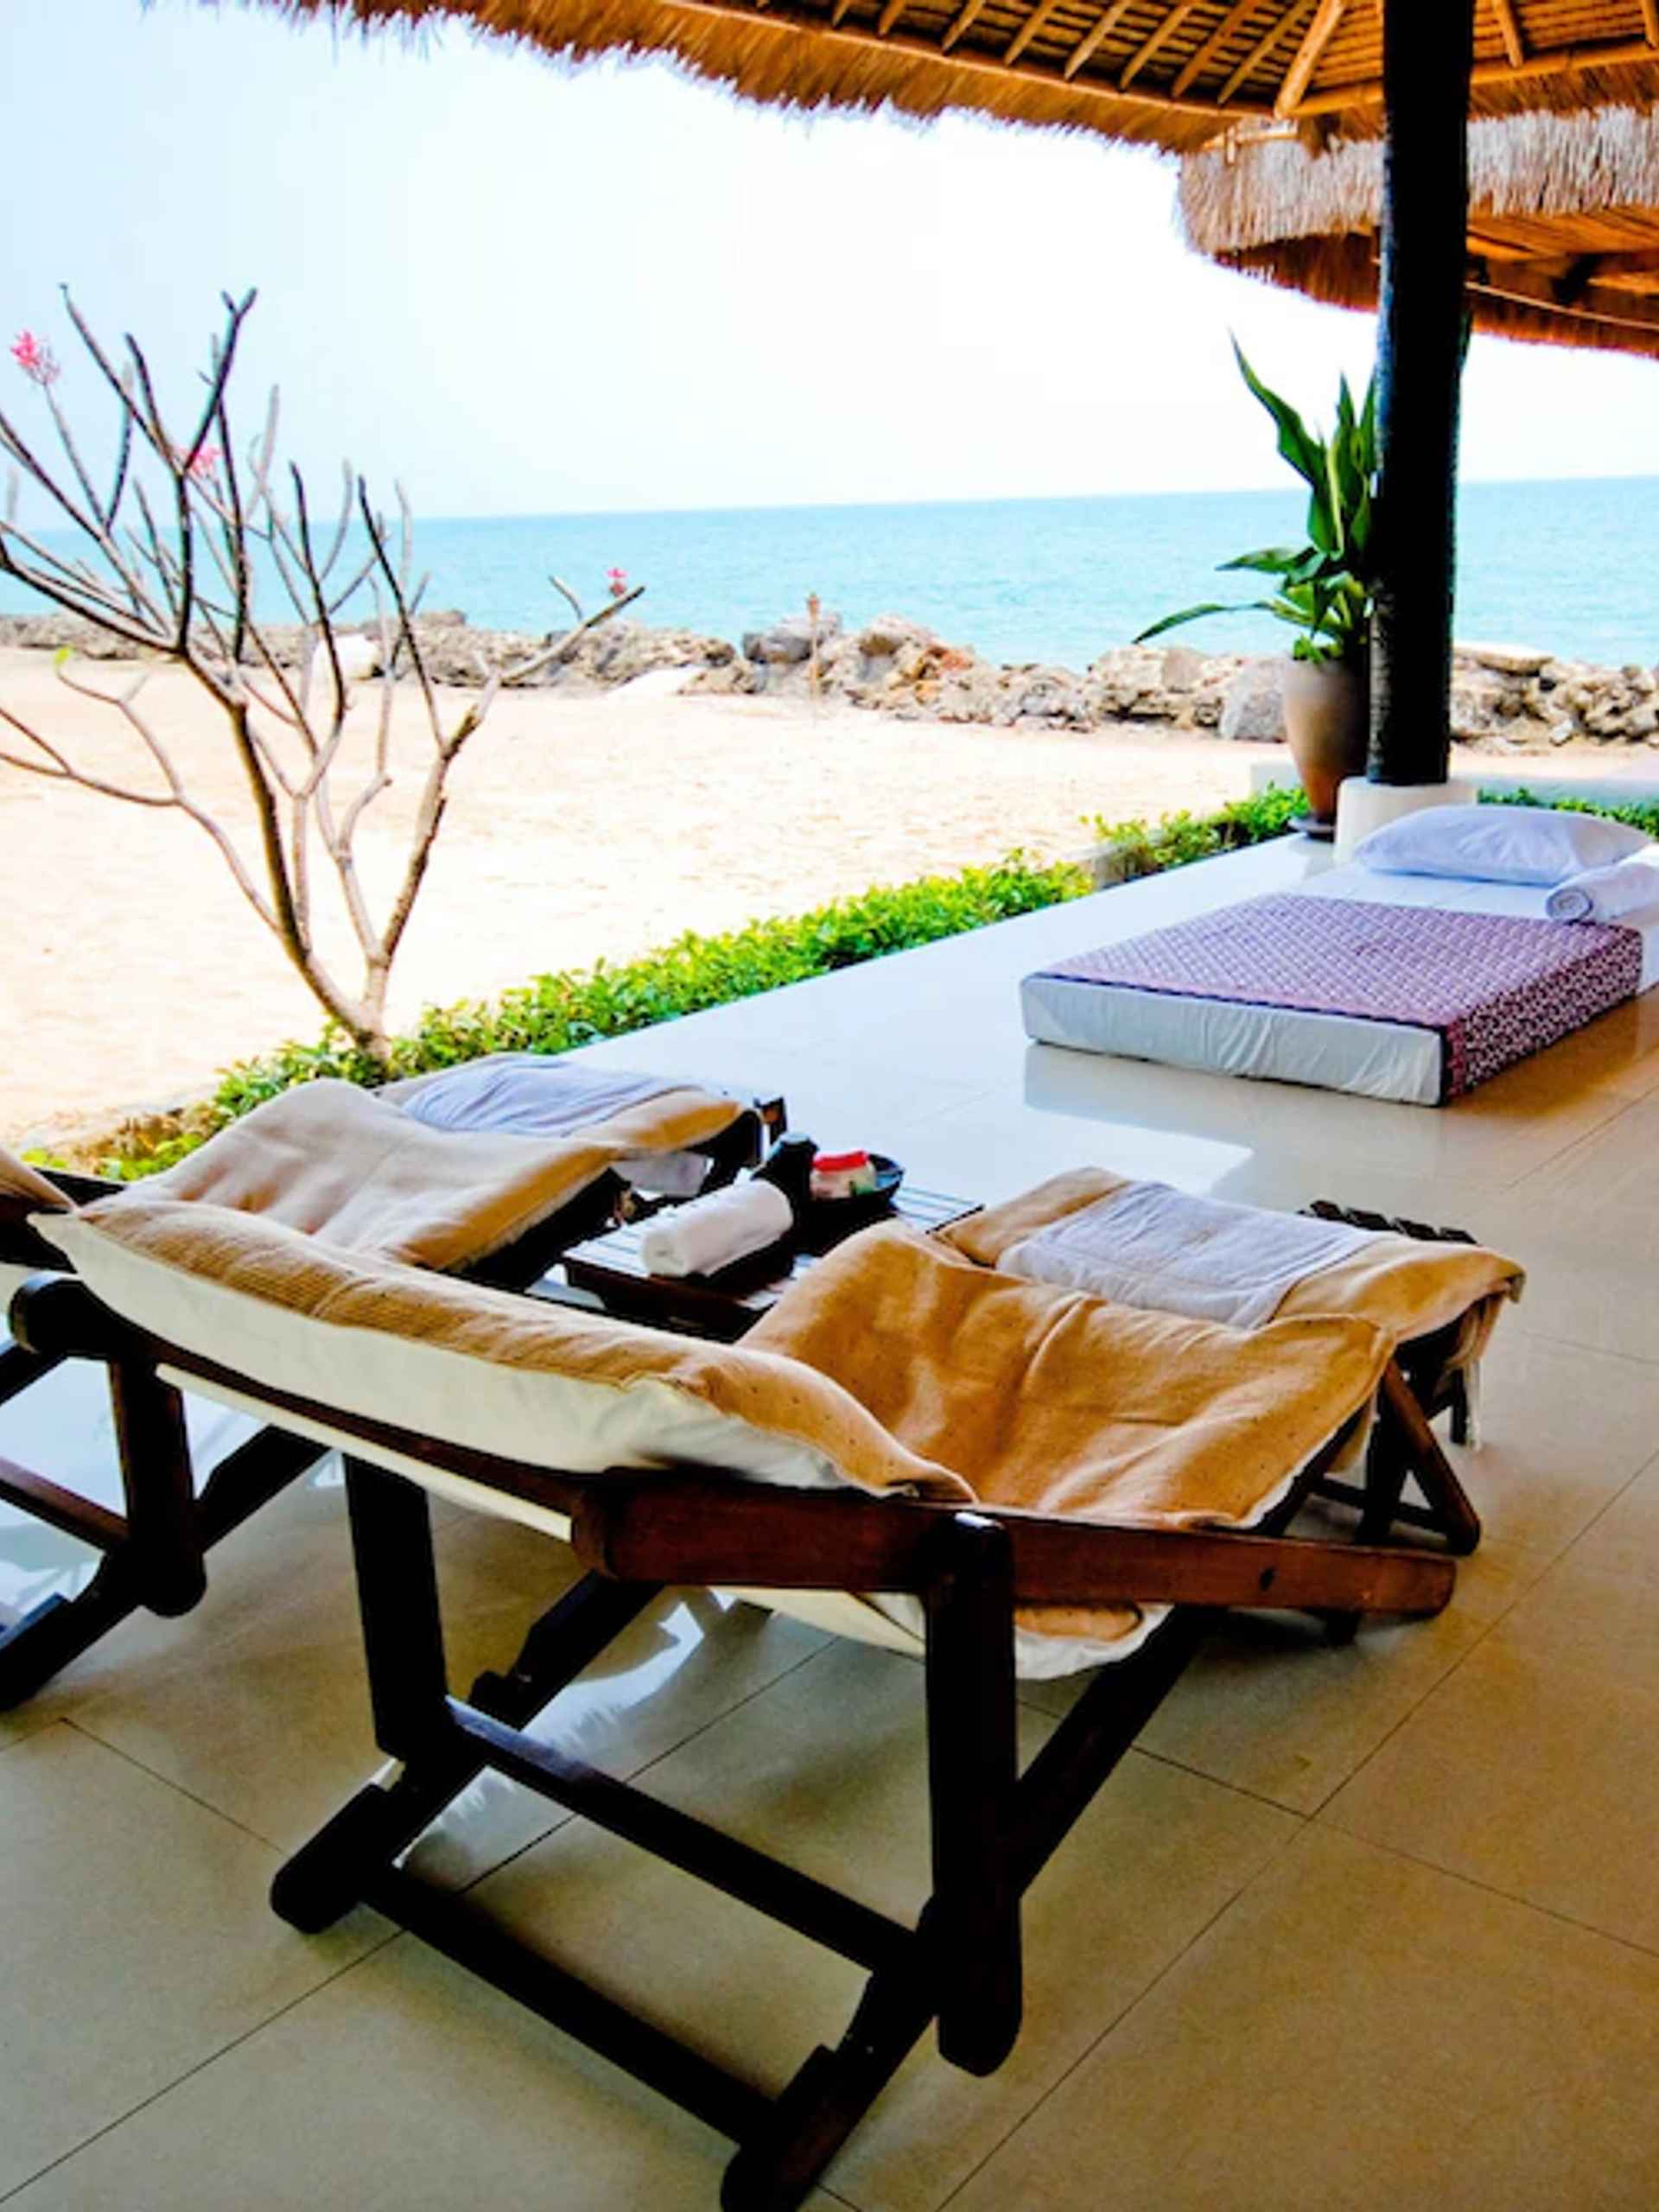 Entertainment Facility Puktien Cabana Beach Resort and Residence